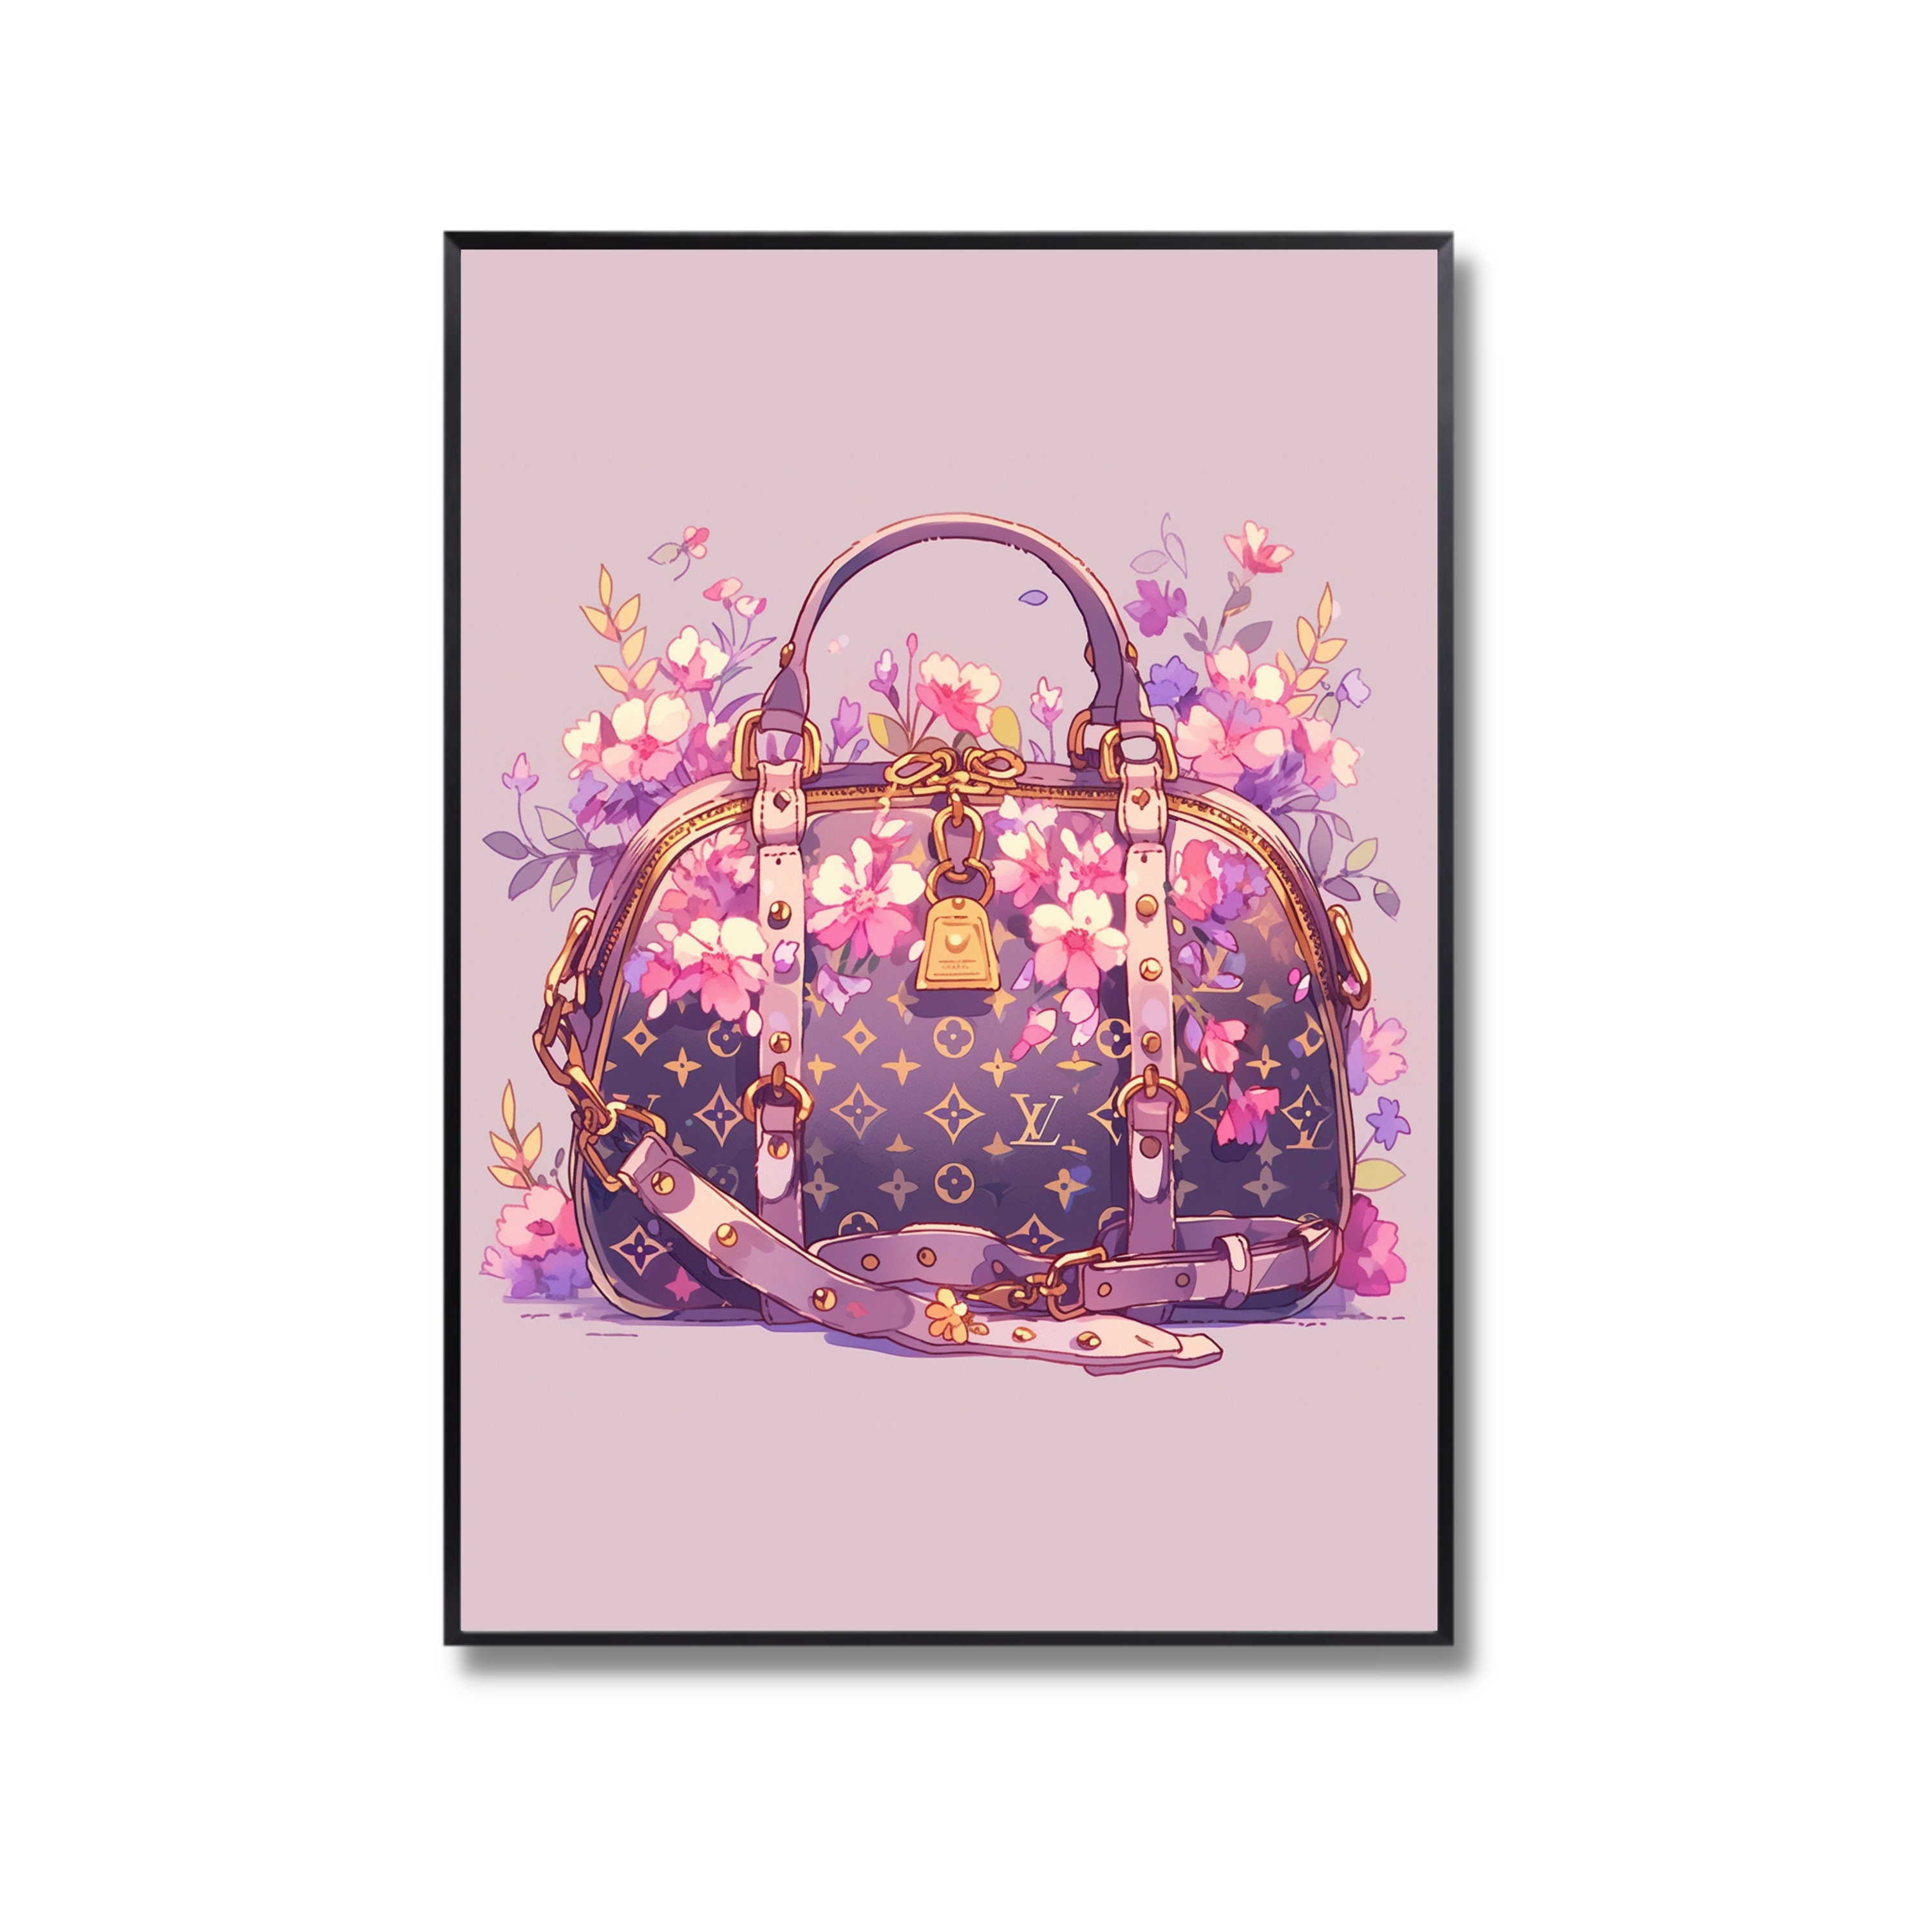 Malle Fleurs 11x14 Watercolour print - Floral Art Print - Pink Flowers in  Louis Vuitton trunk